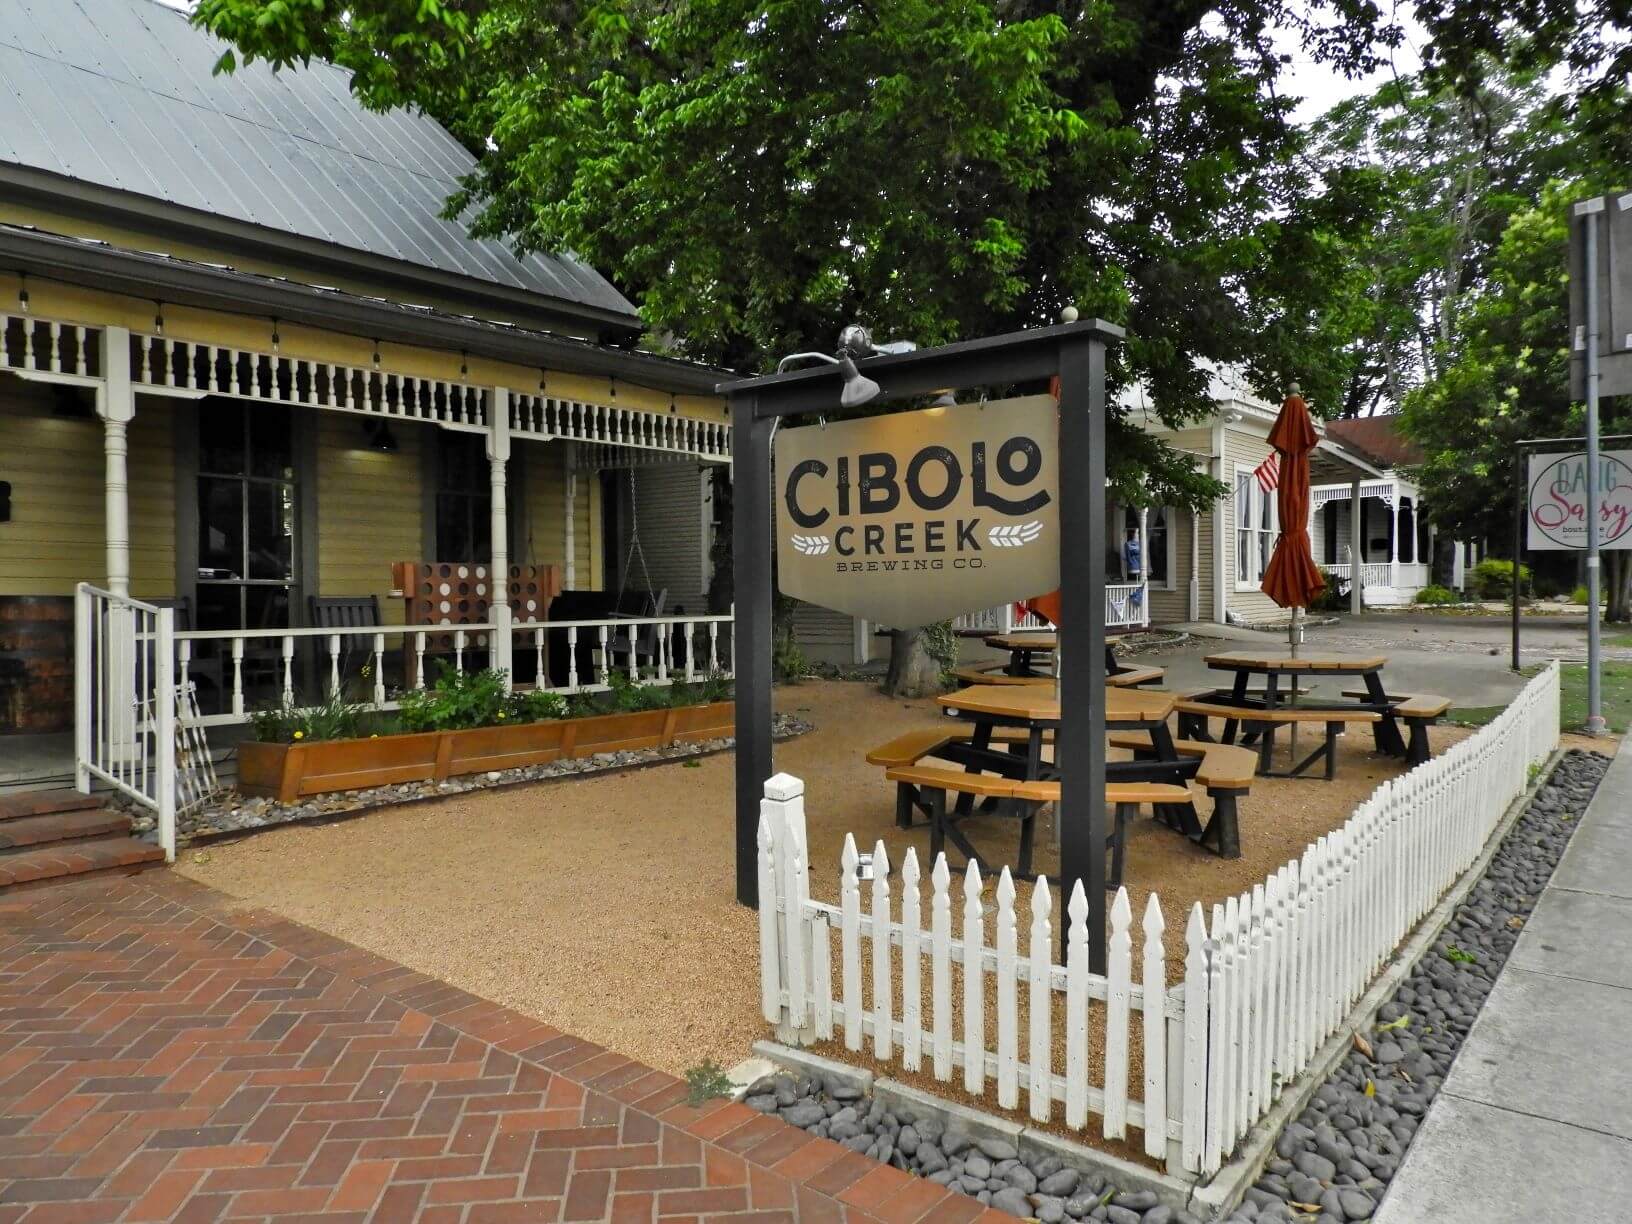 Cibolo Creek Brewing Company patio and store front